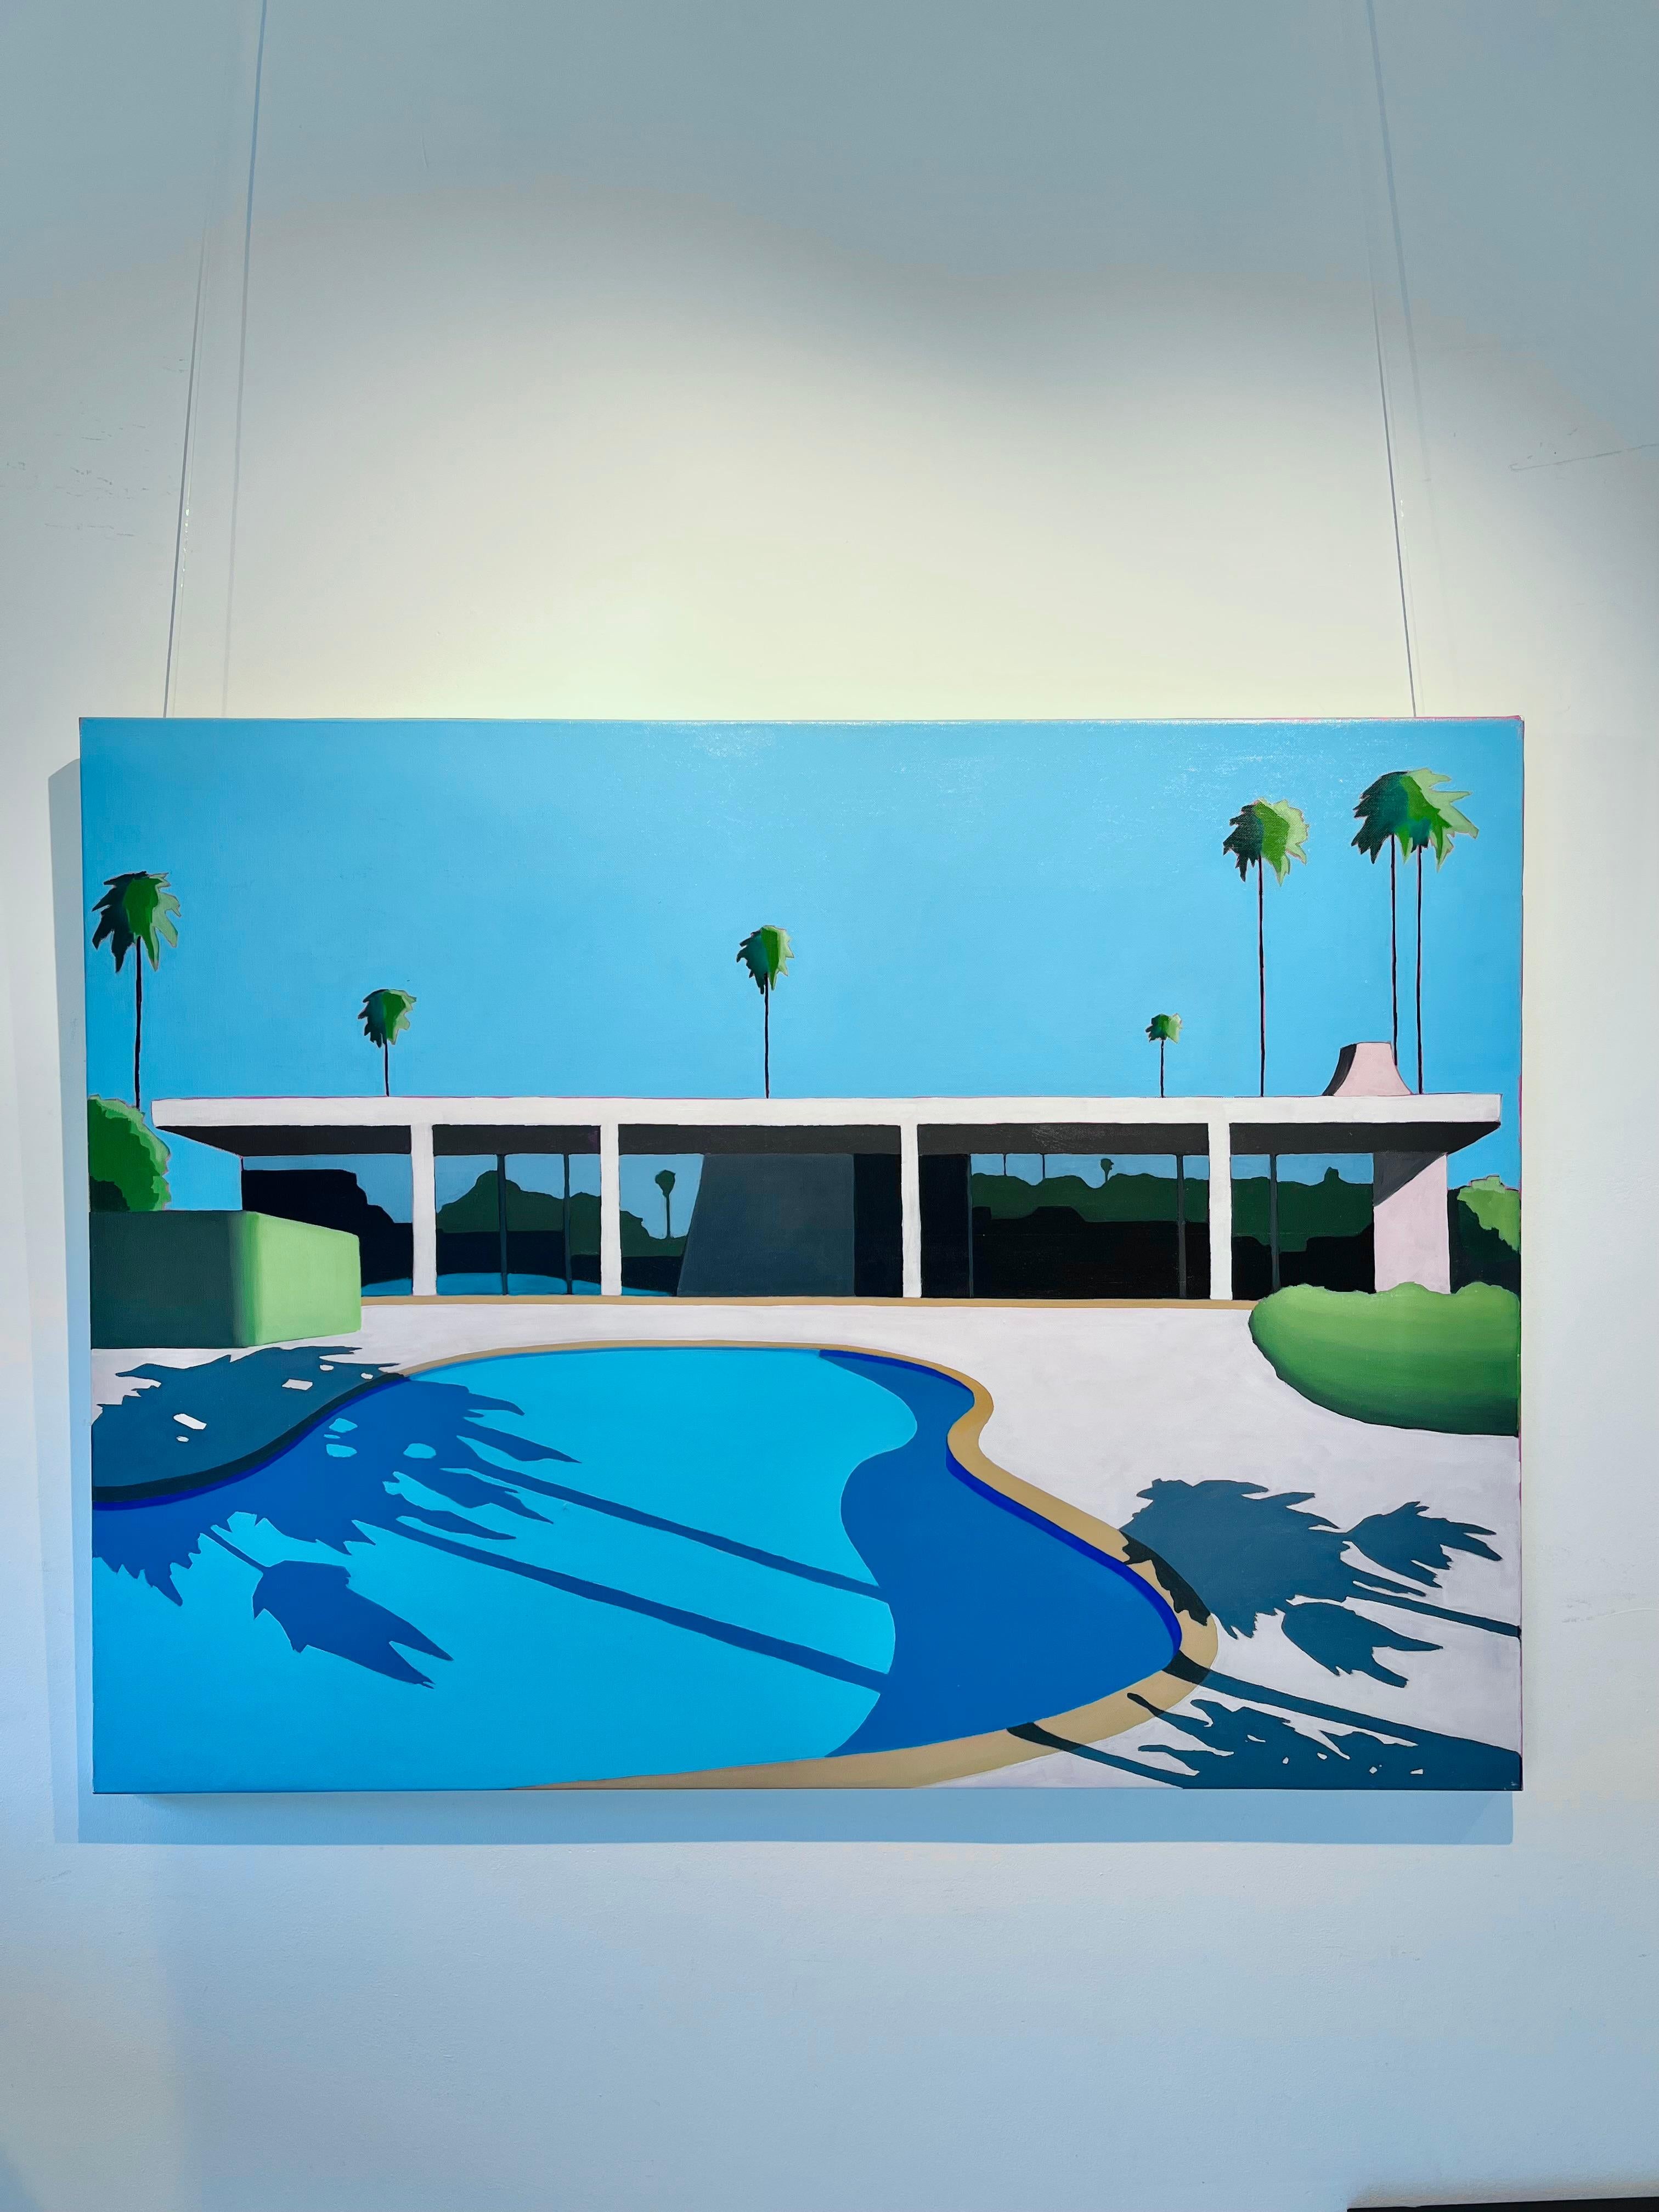 Pool Encompassed by Palm Trees - réalisme original - minimalisme - Painting de Al Freno